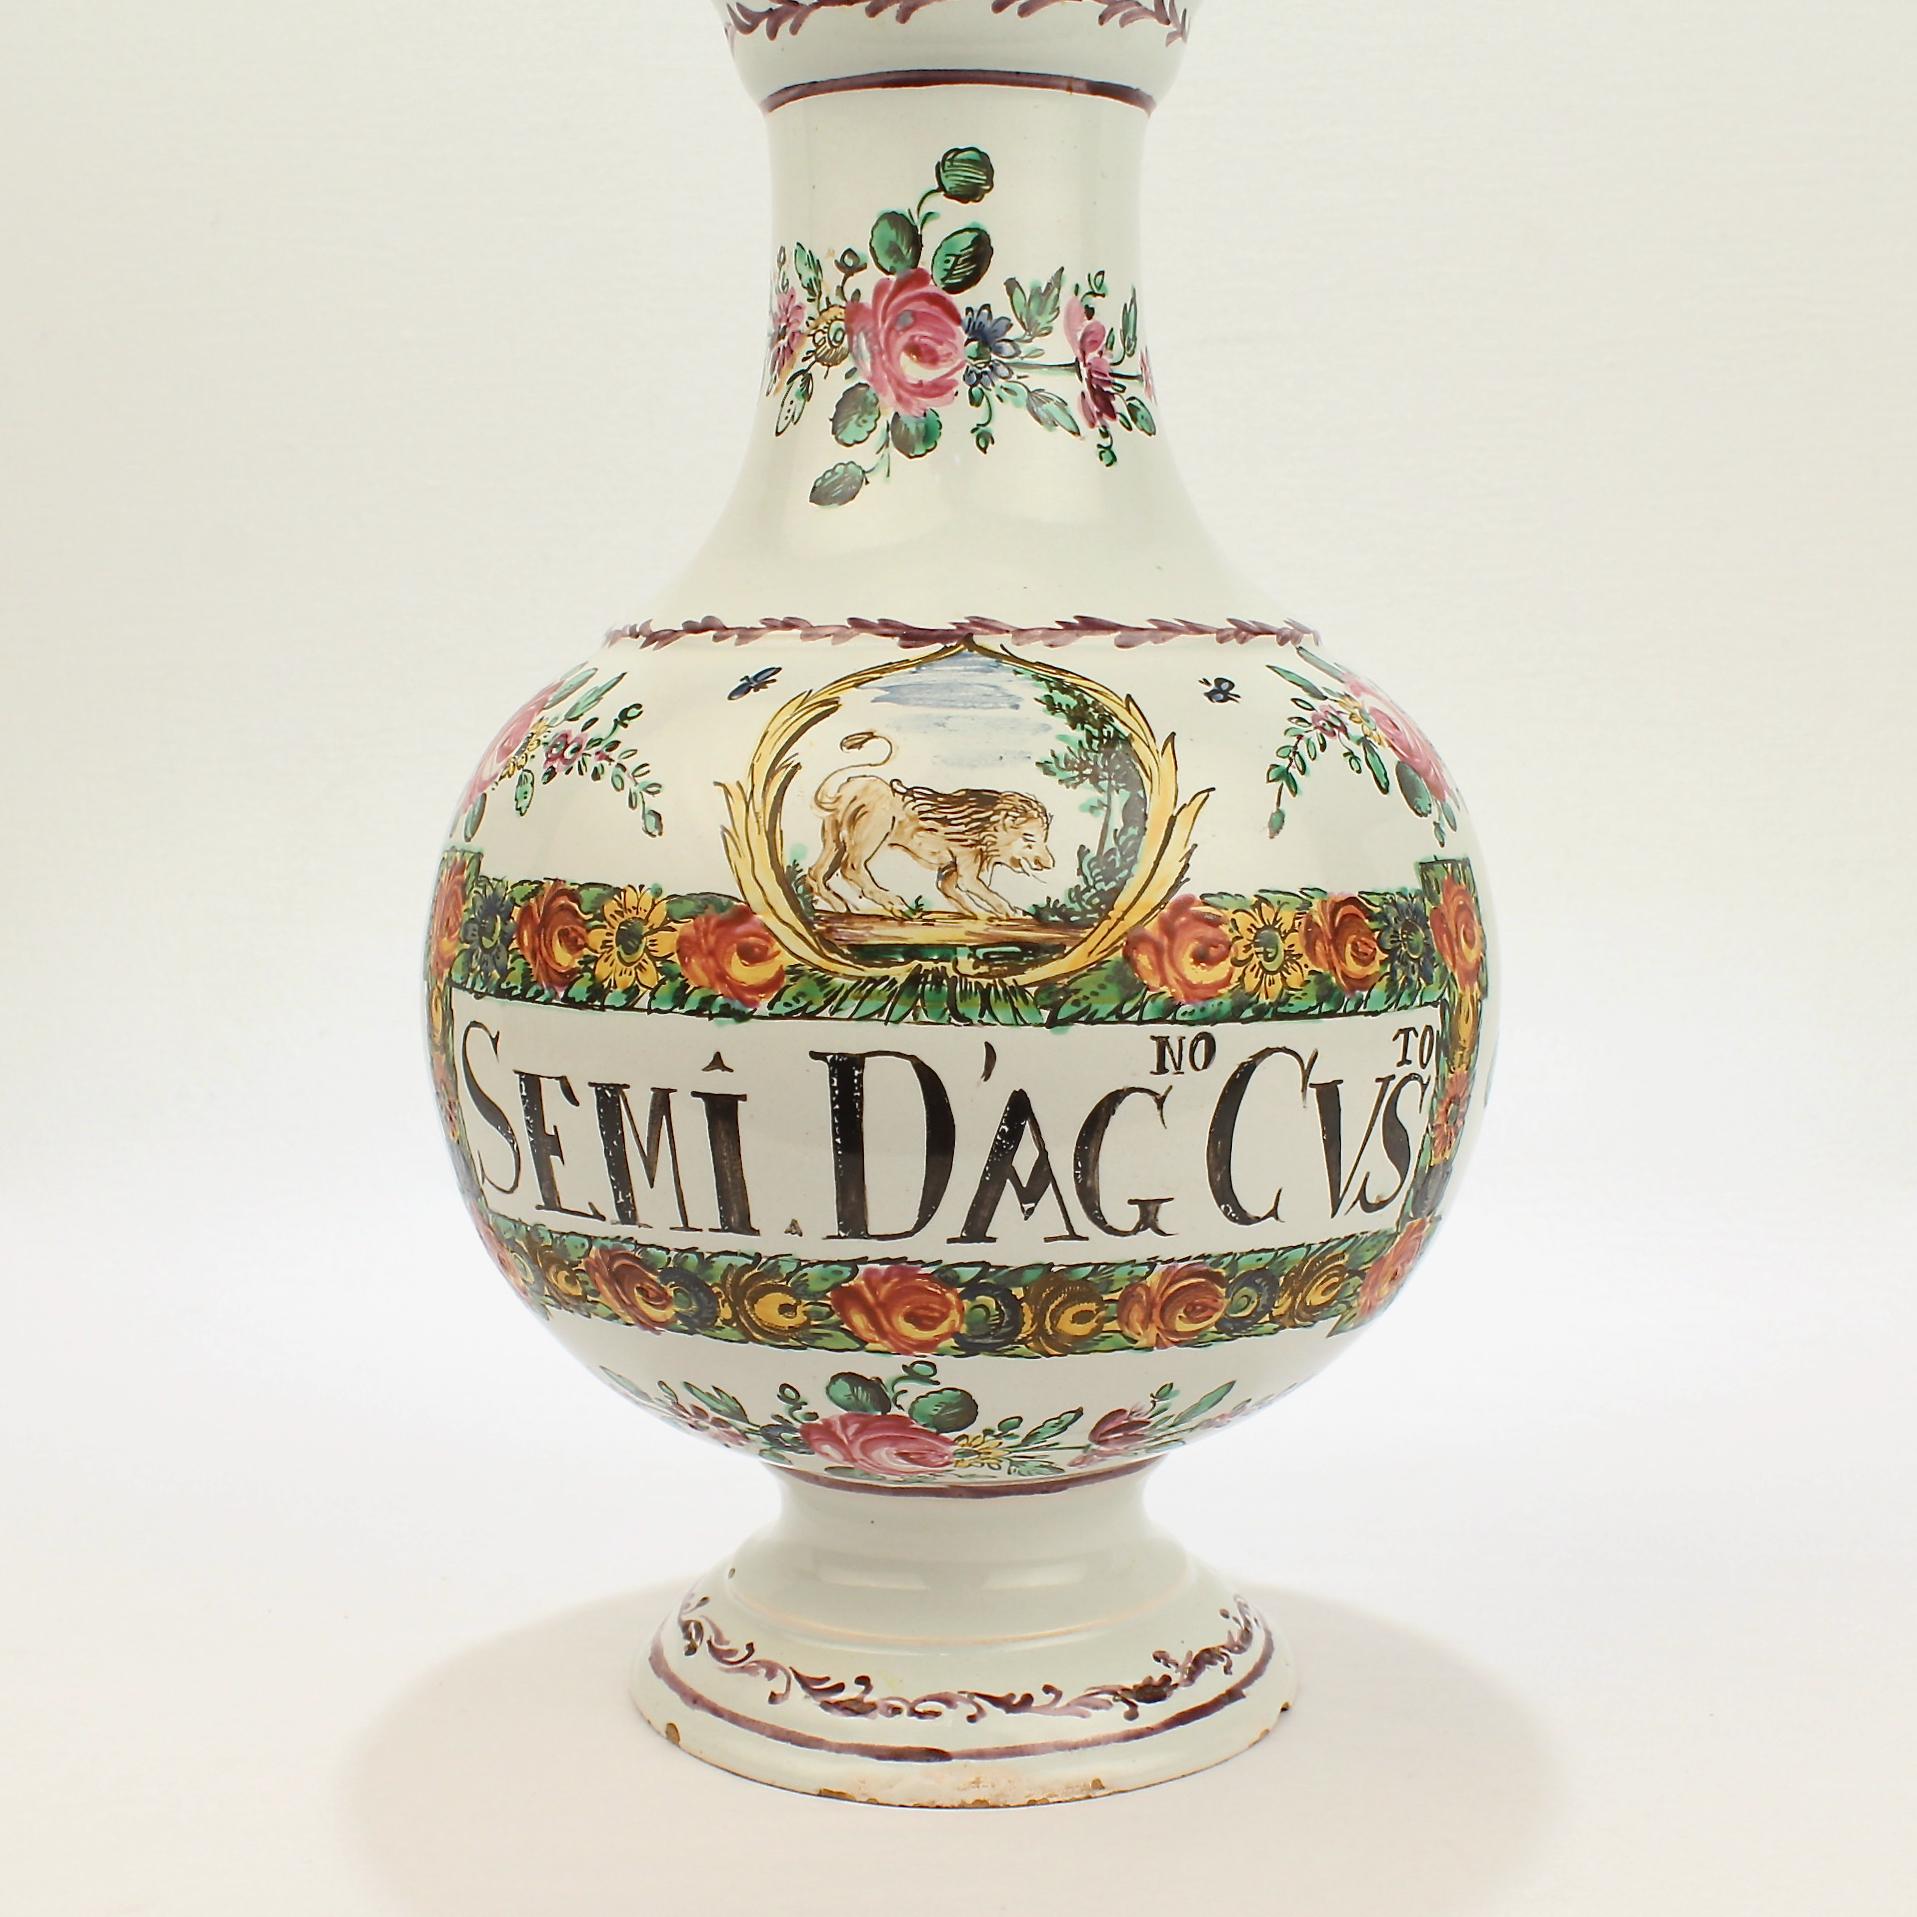 Antique Italian Faience Pottery Apothecary Semi d' Agnocasto Drug Jar For Sale 10